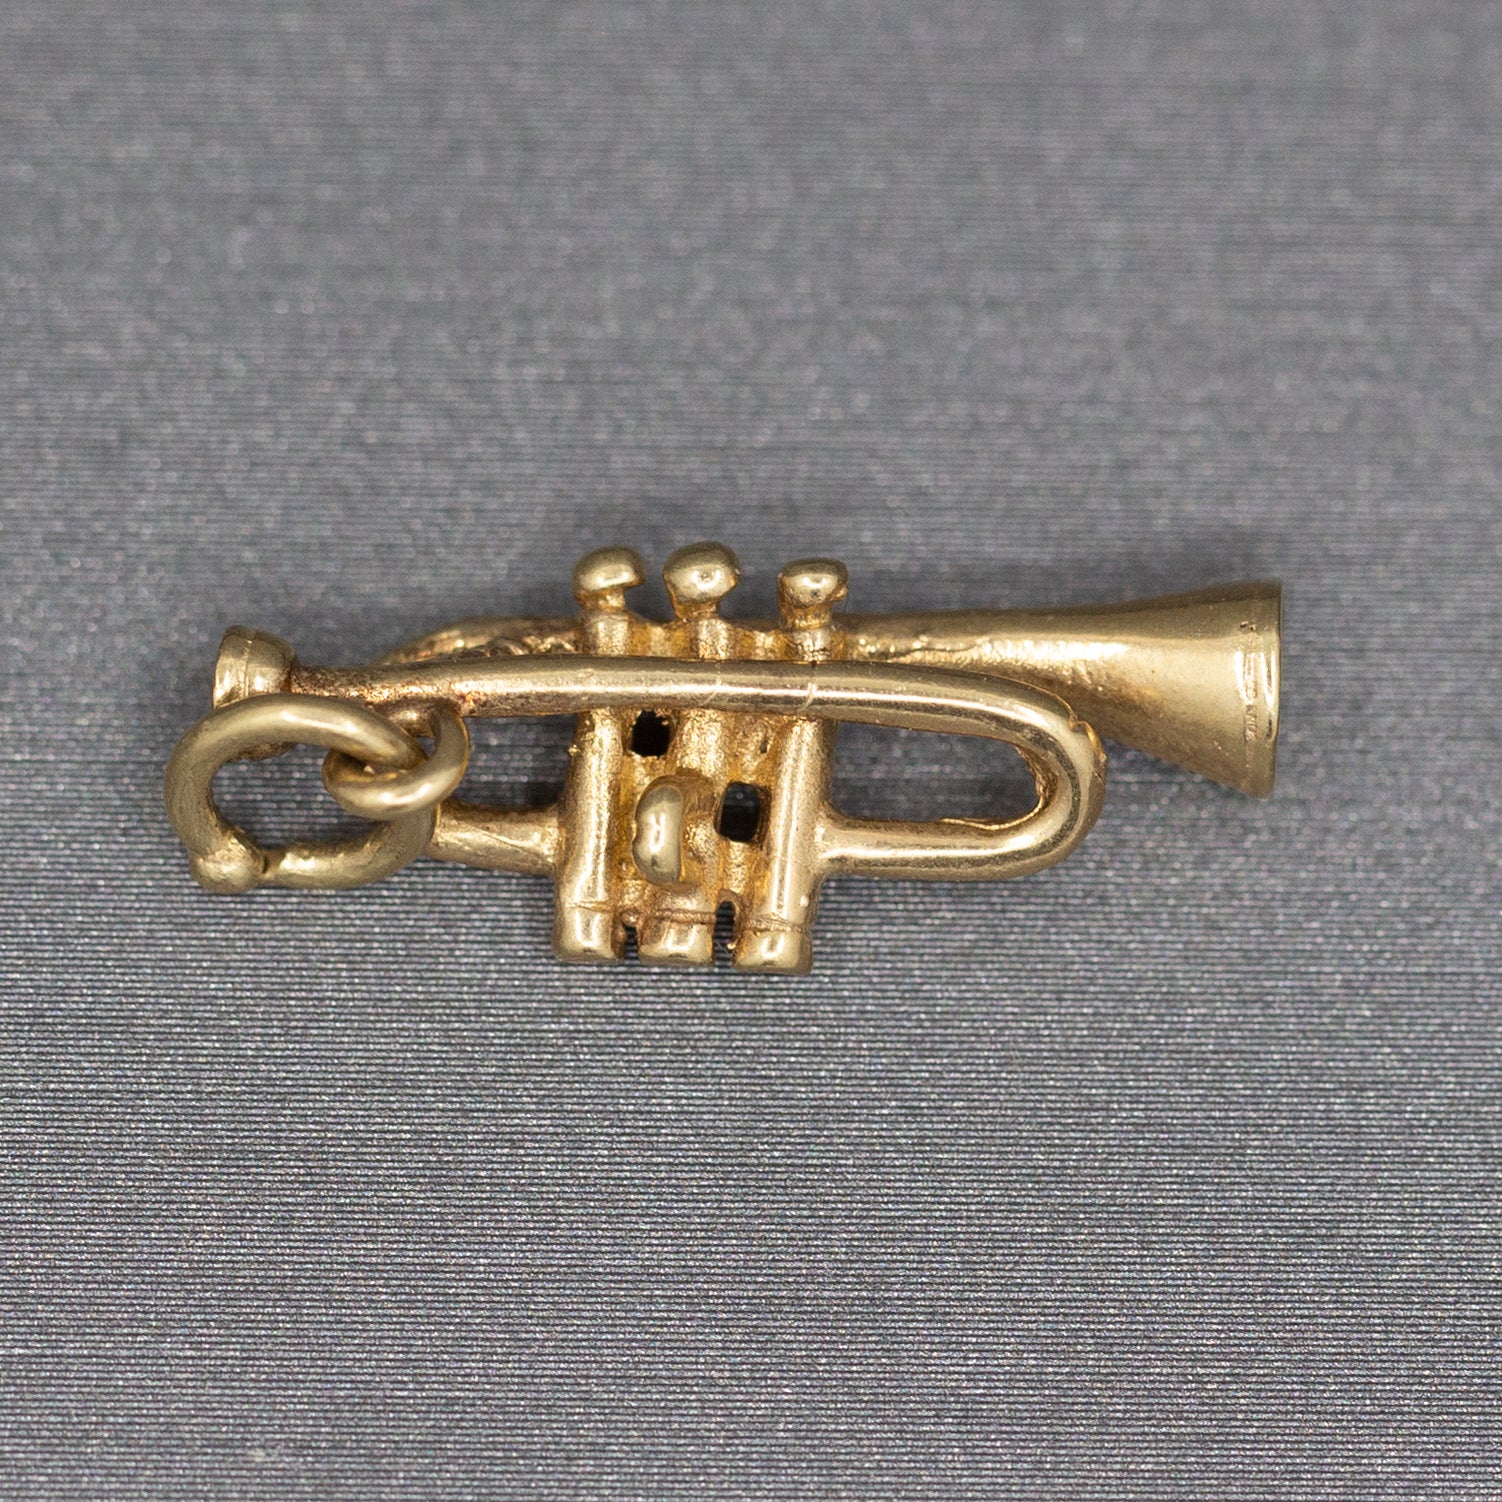 Vintage Trumpet Charm Pendant in Solid 14k Gold